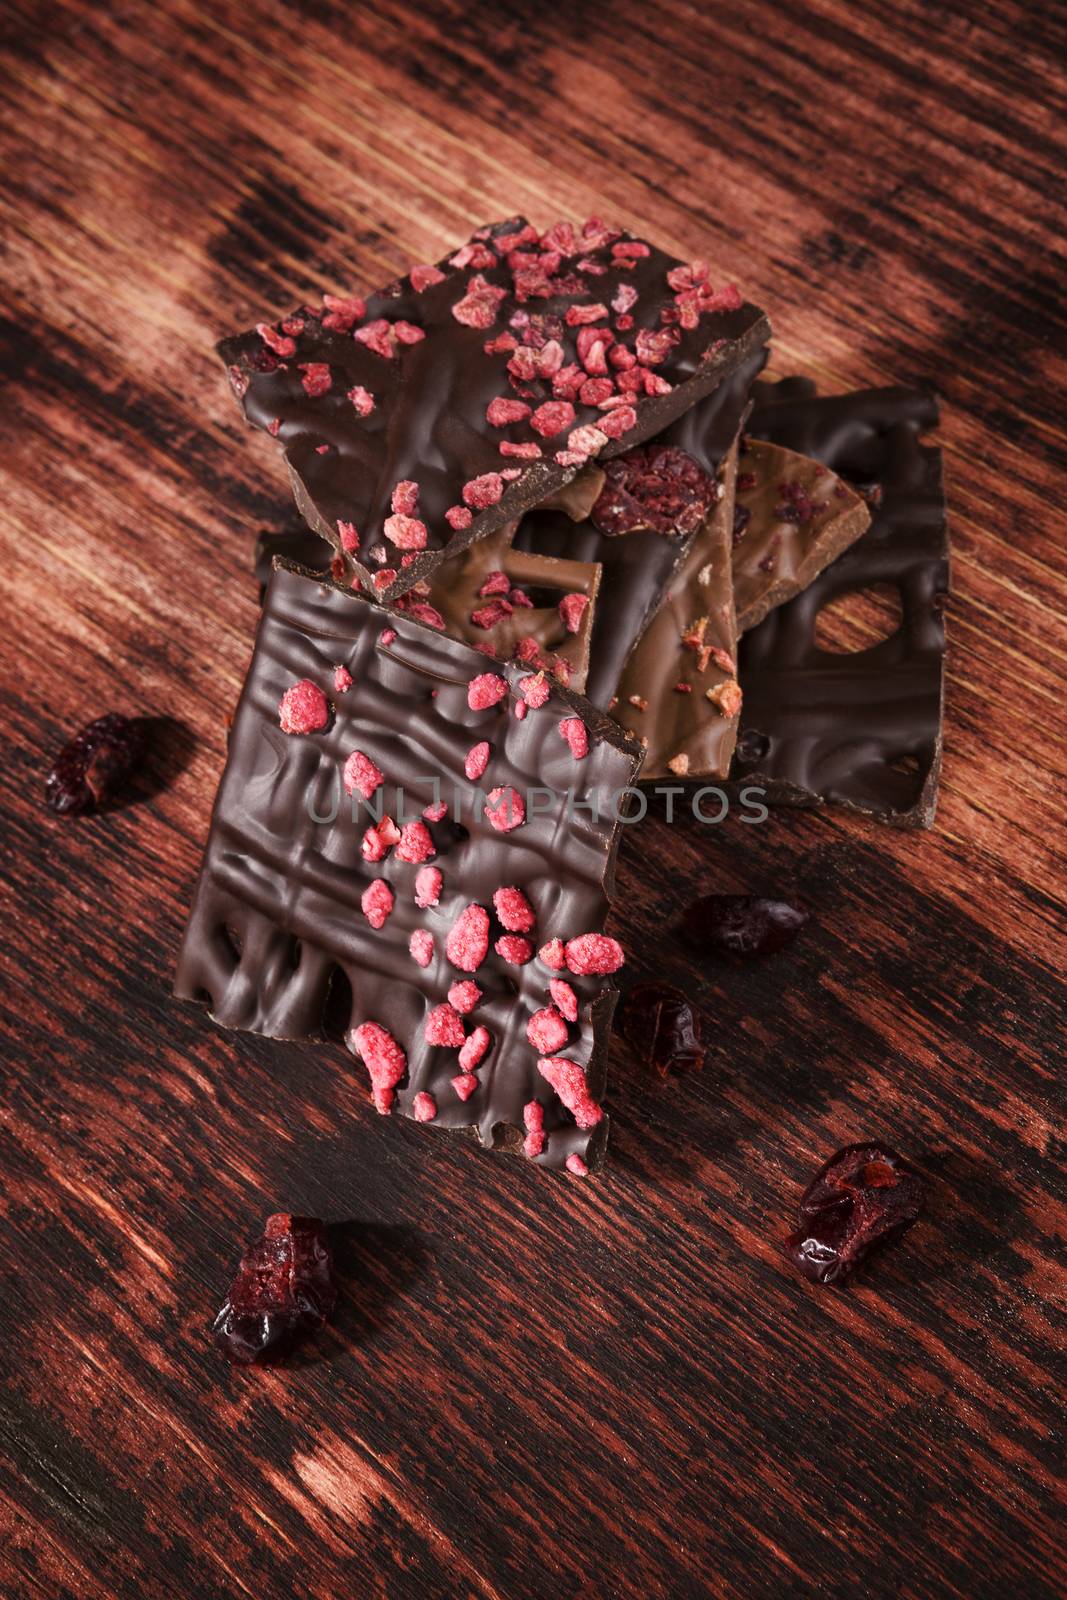 Culinary gourmet chocolate pieces on dark wooden background. Luxurious dark chocolate.